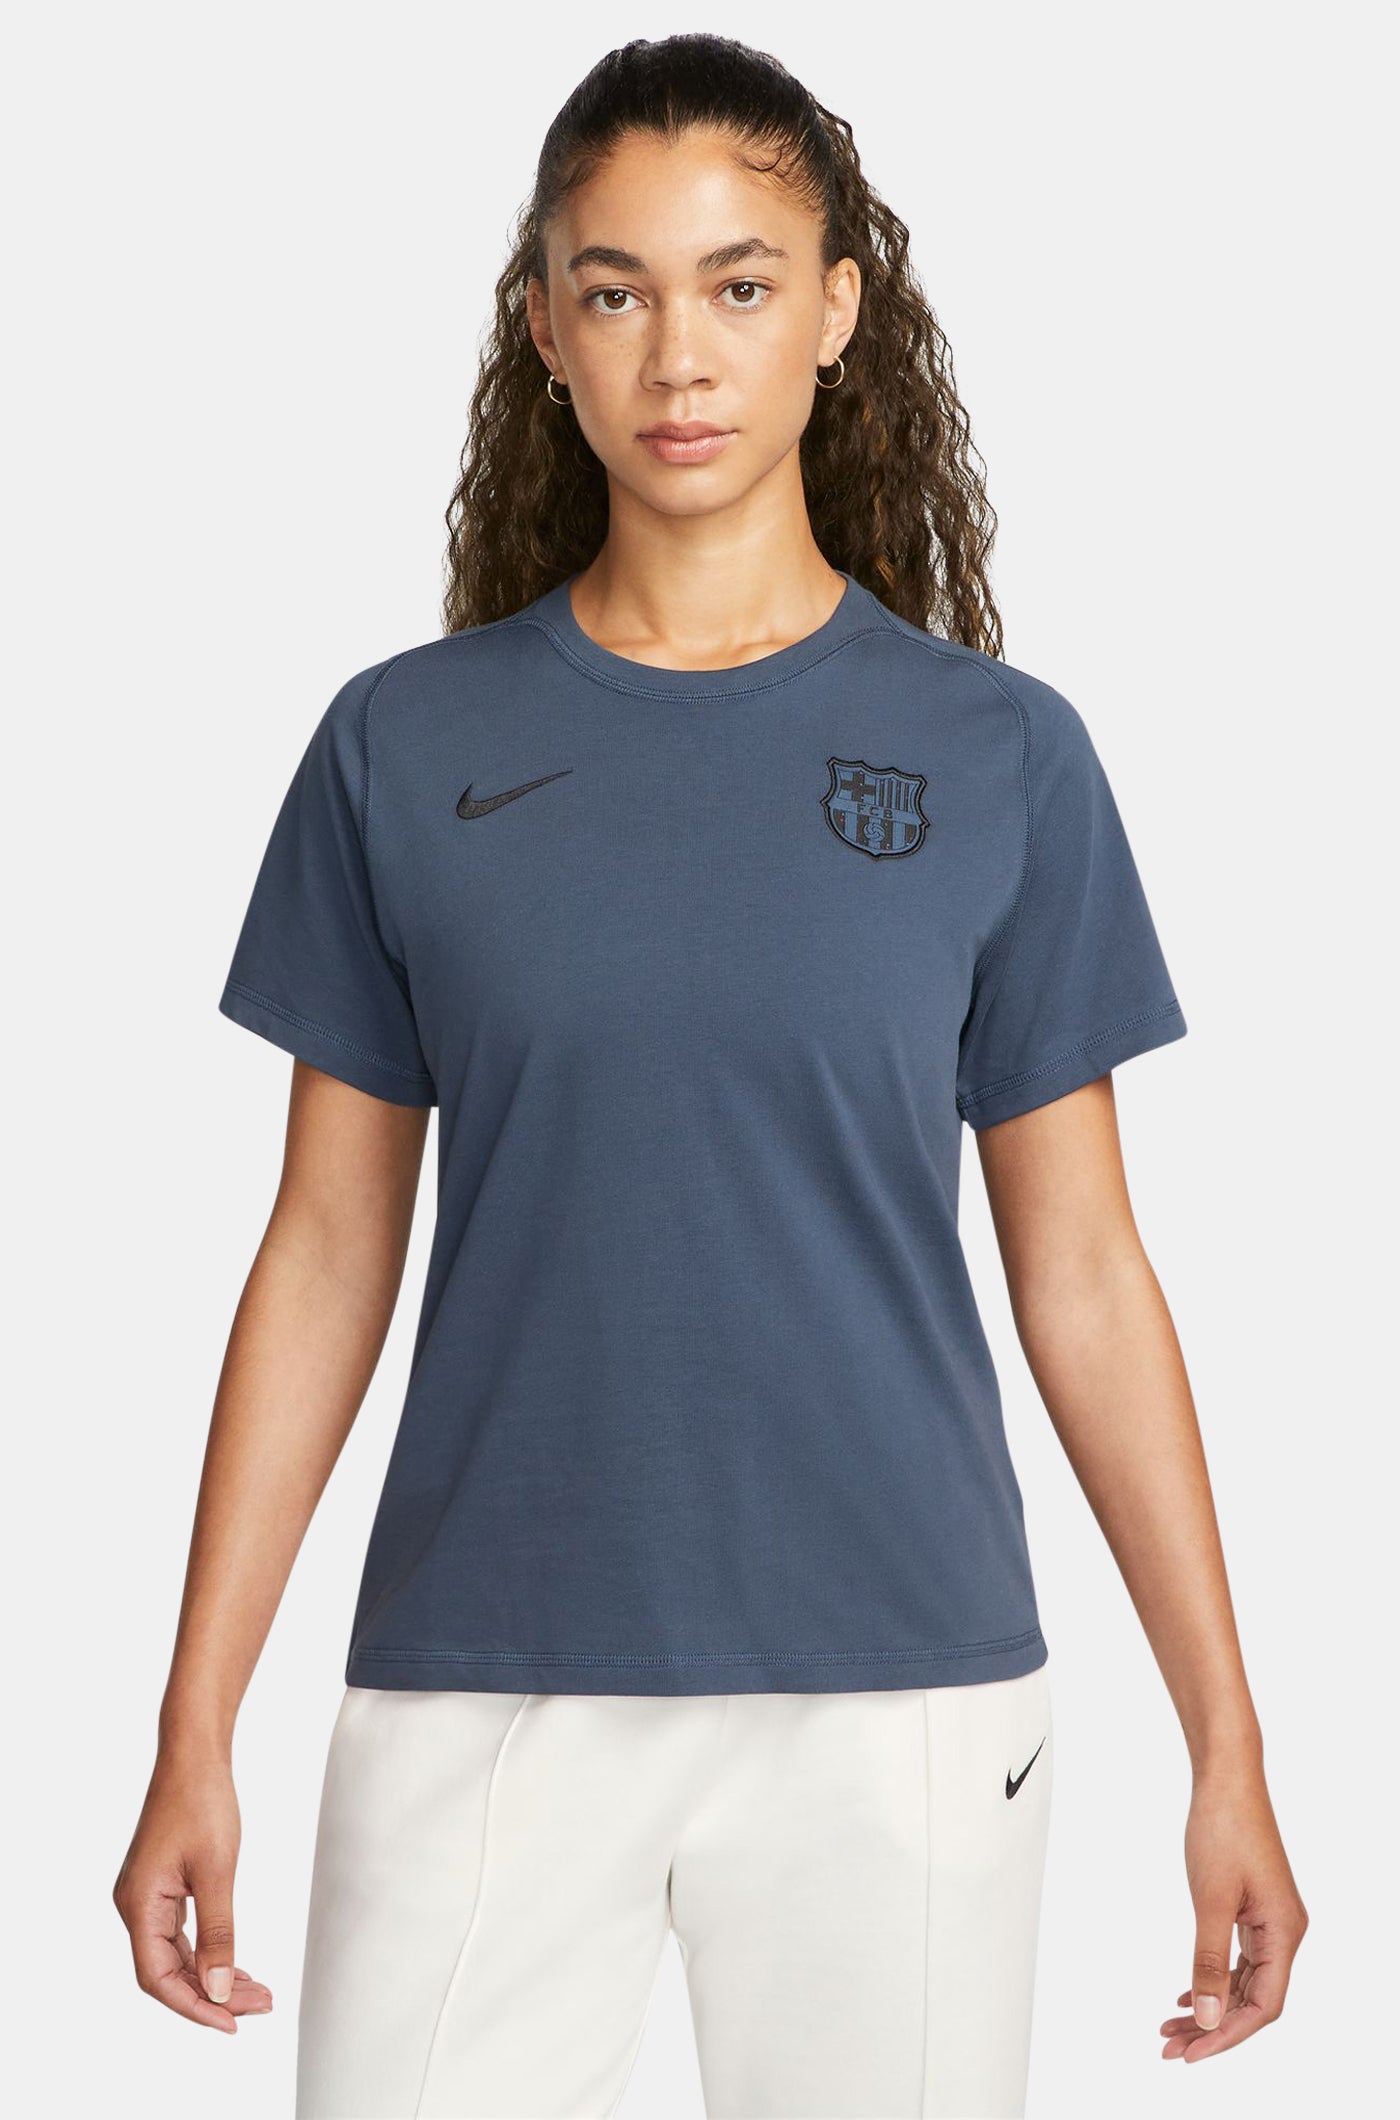 T-Shirt blue Barça Nike – Women – Barça Official Store Spotify Camp Nou